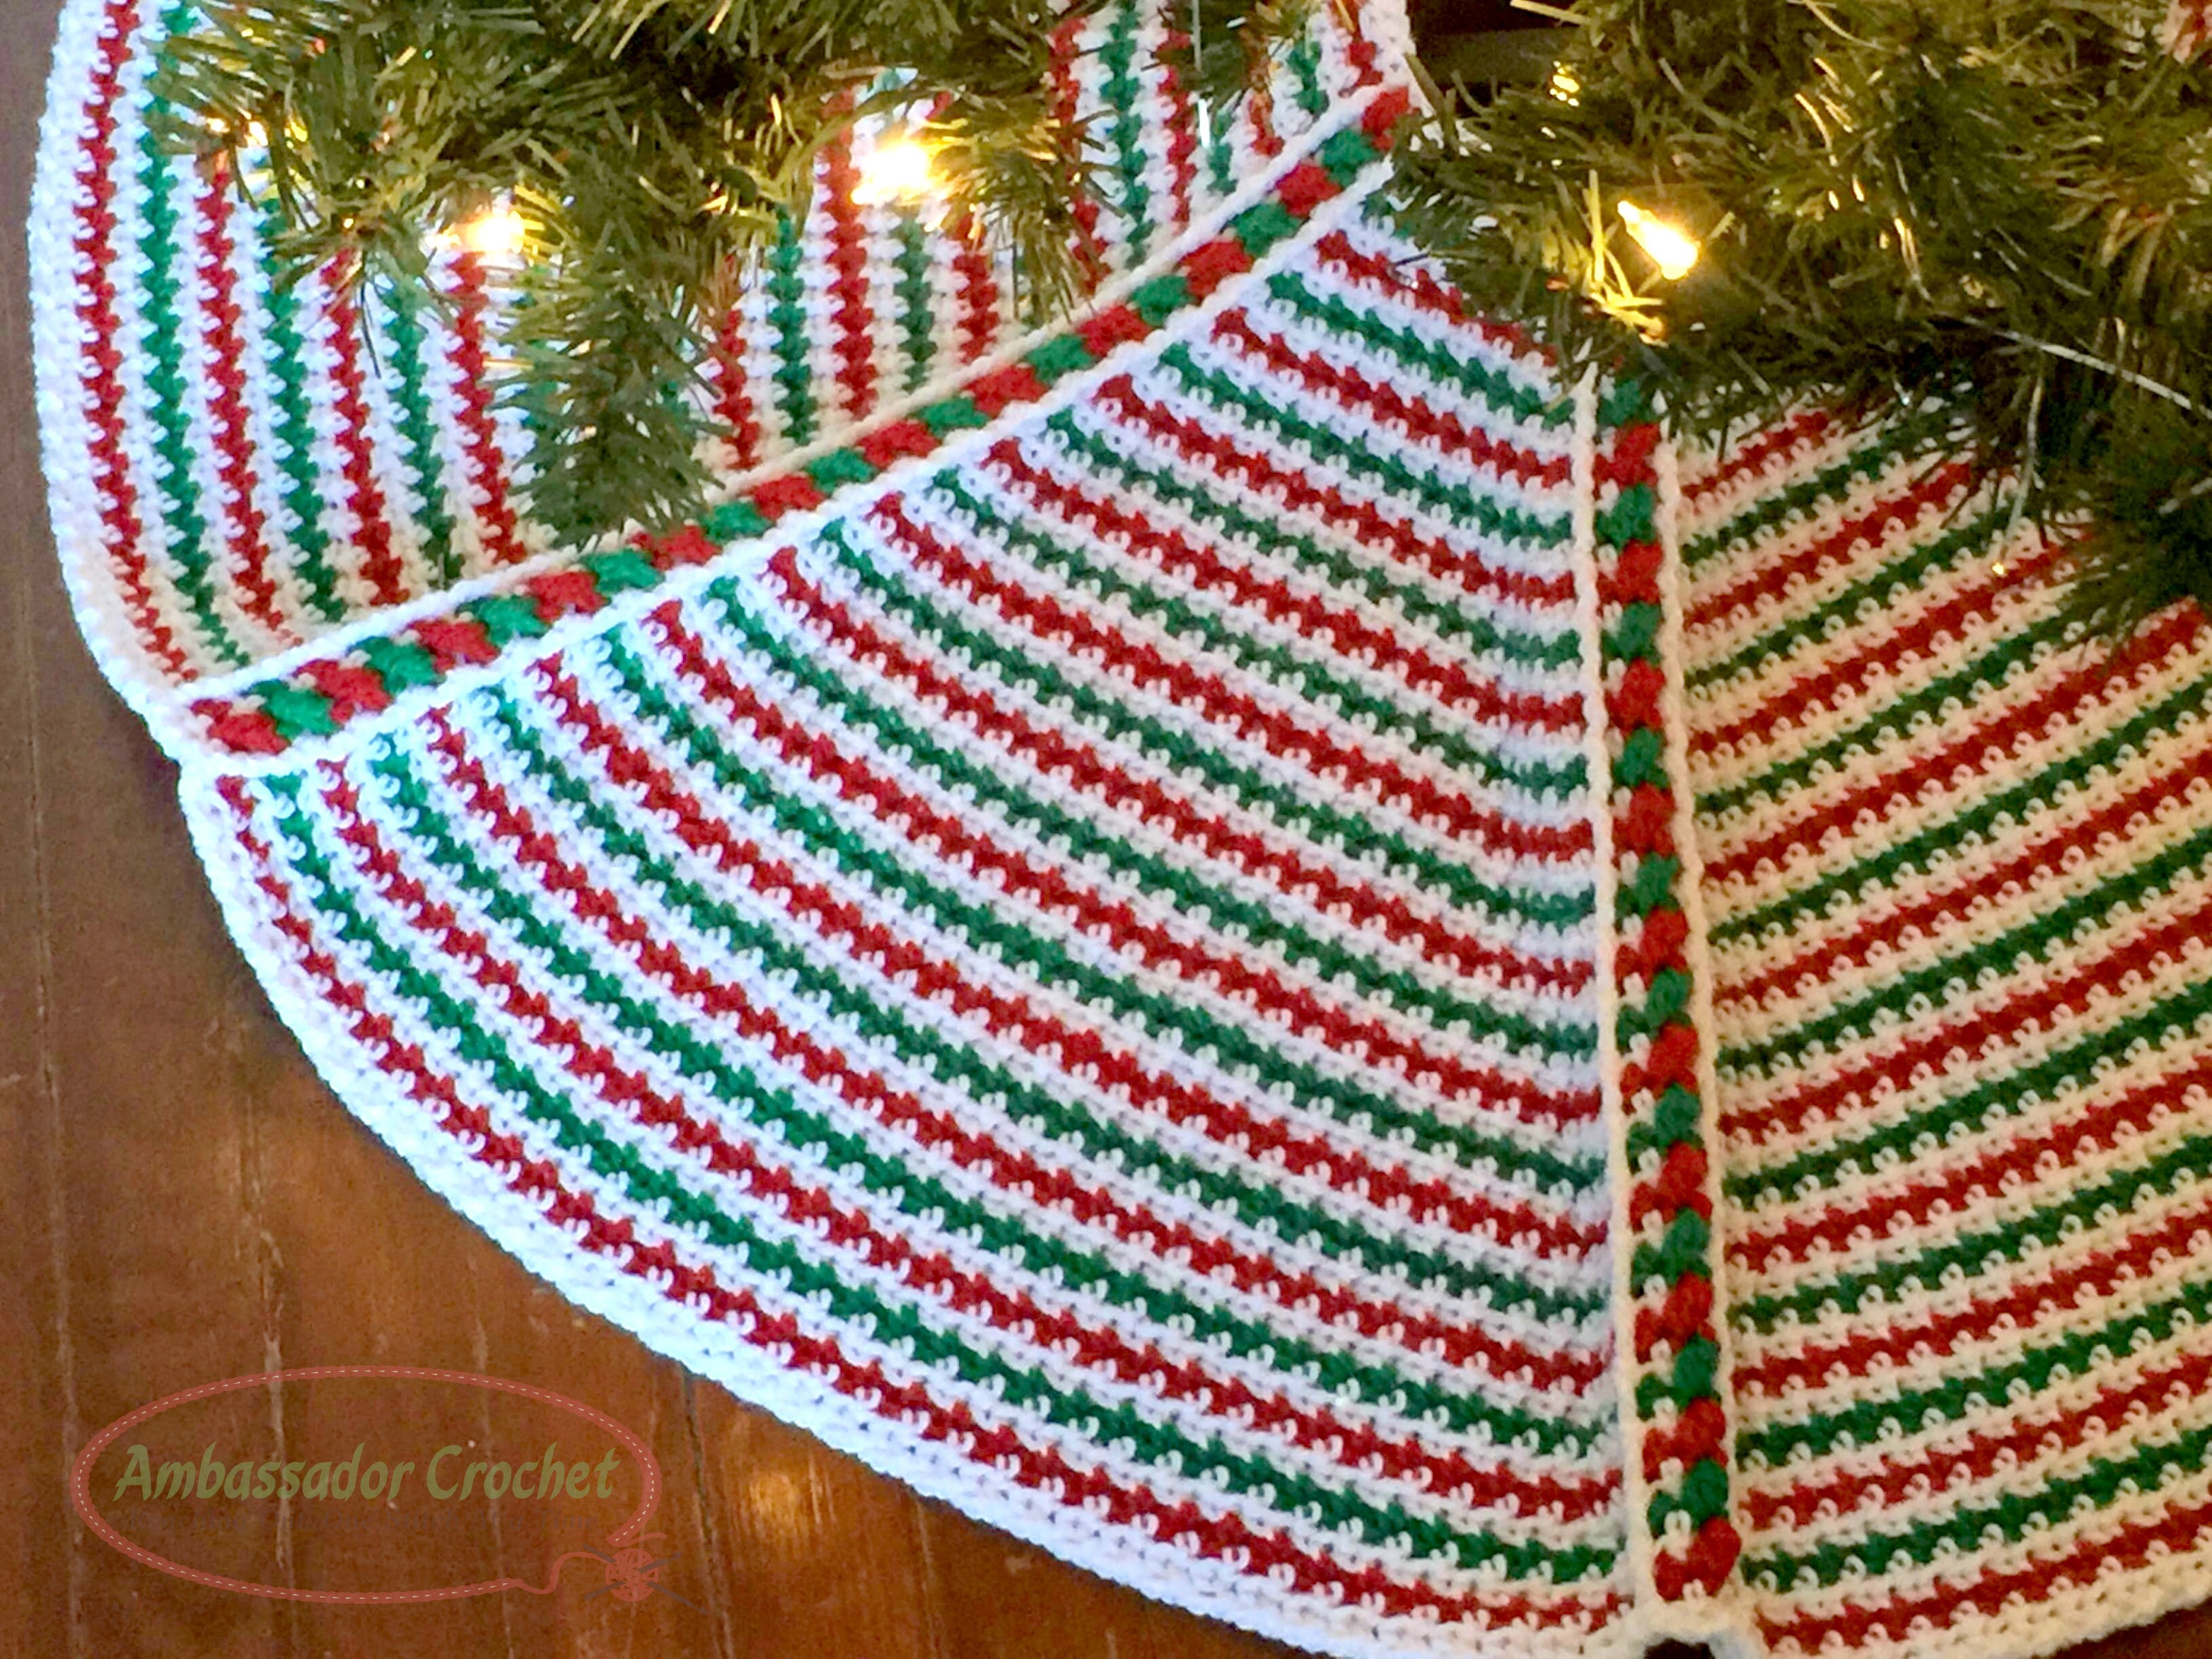 Holiday Magic Christmas Tree Skirt crochet pattern by Ambassador Crochet